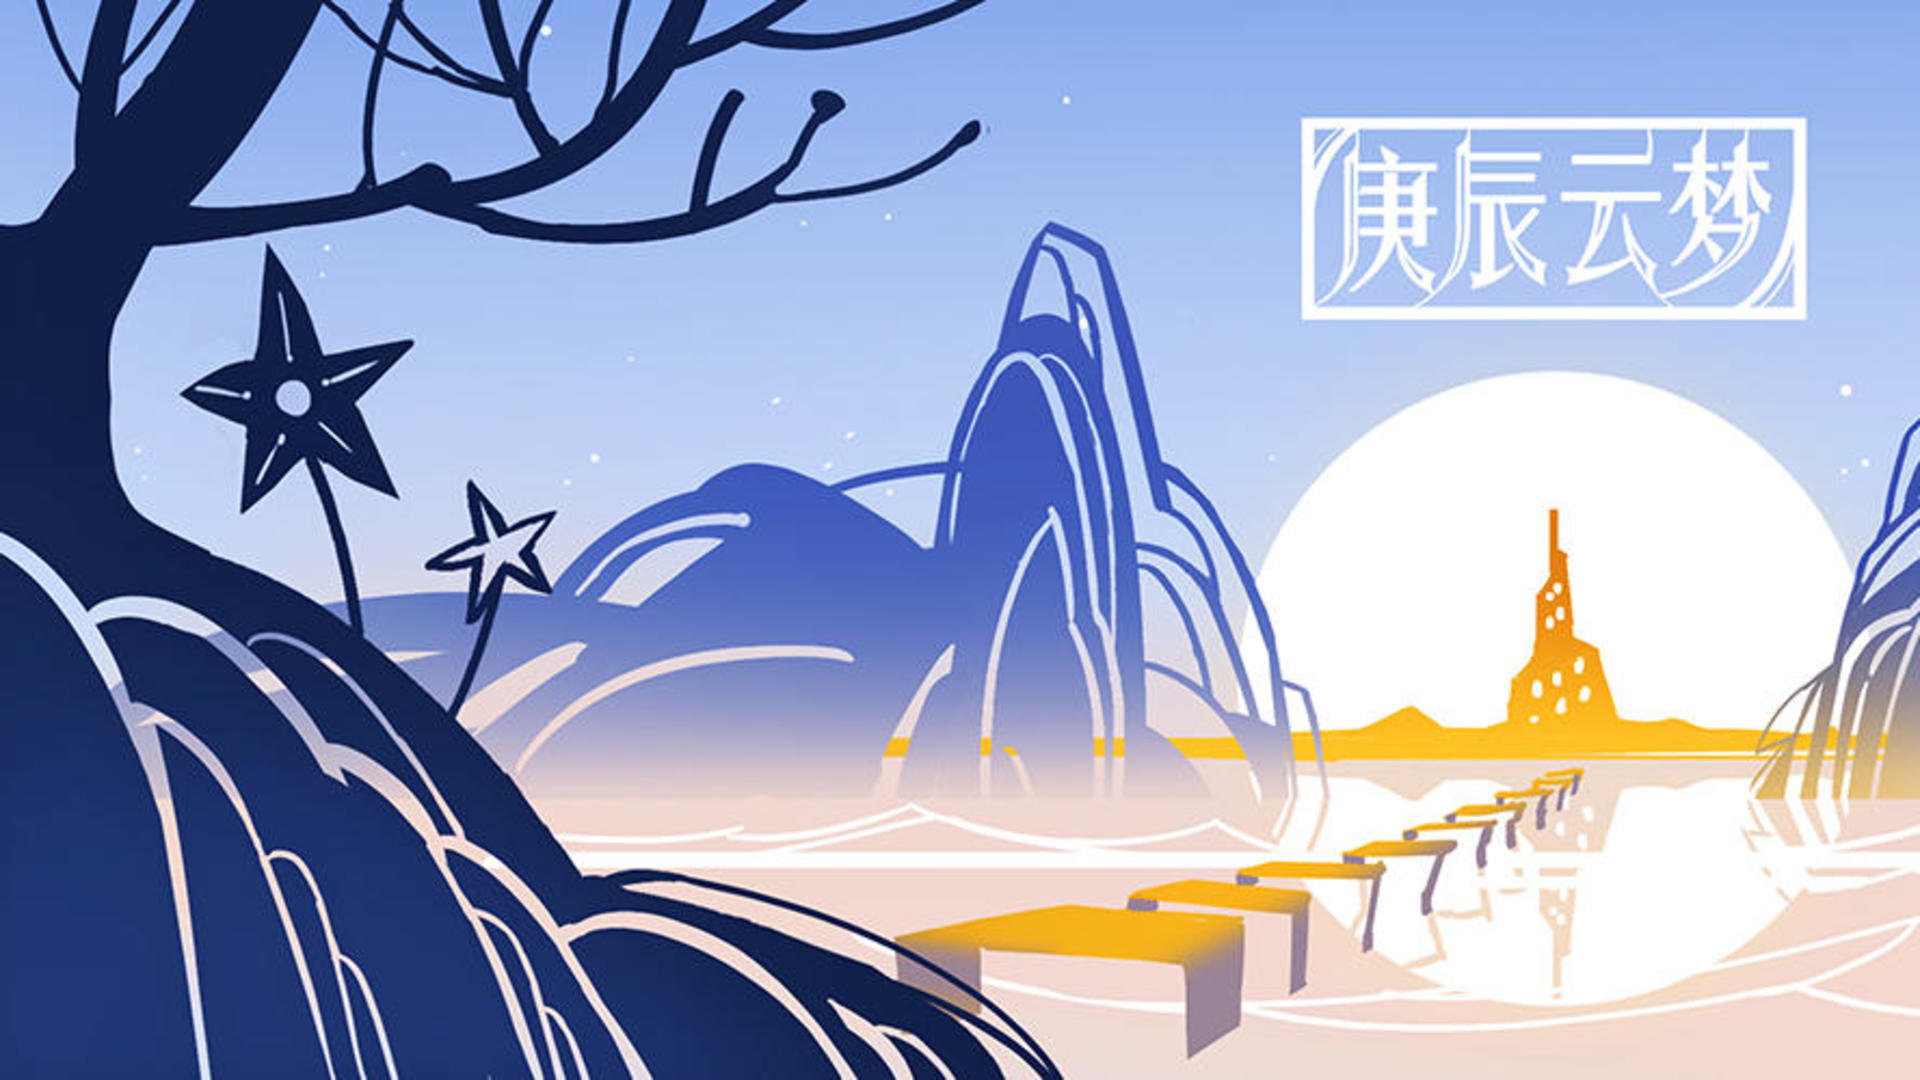 Banner of 庚辰雲夢 